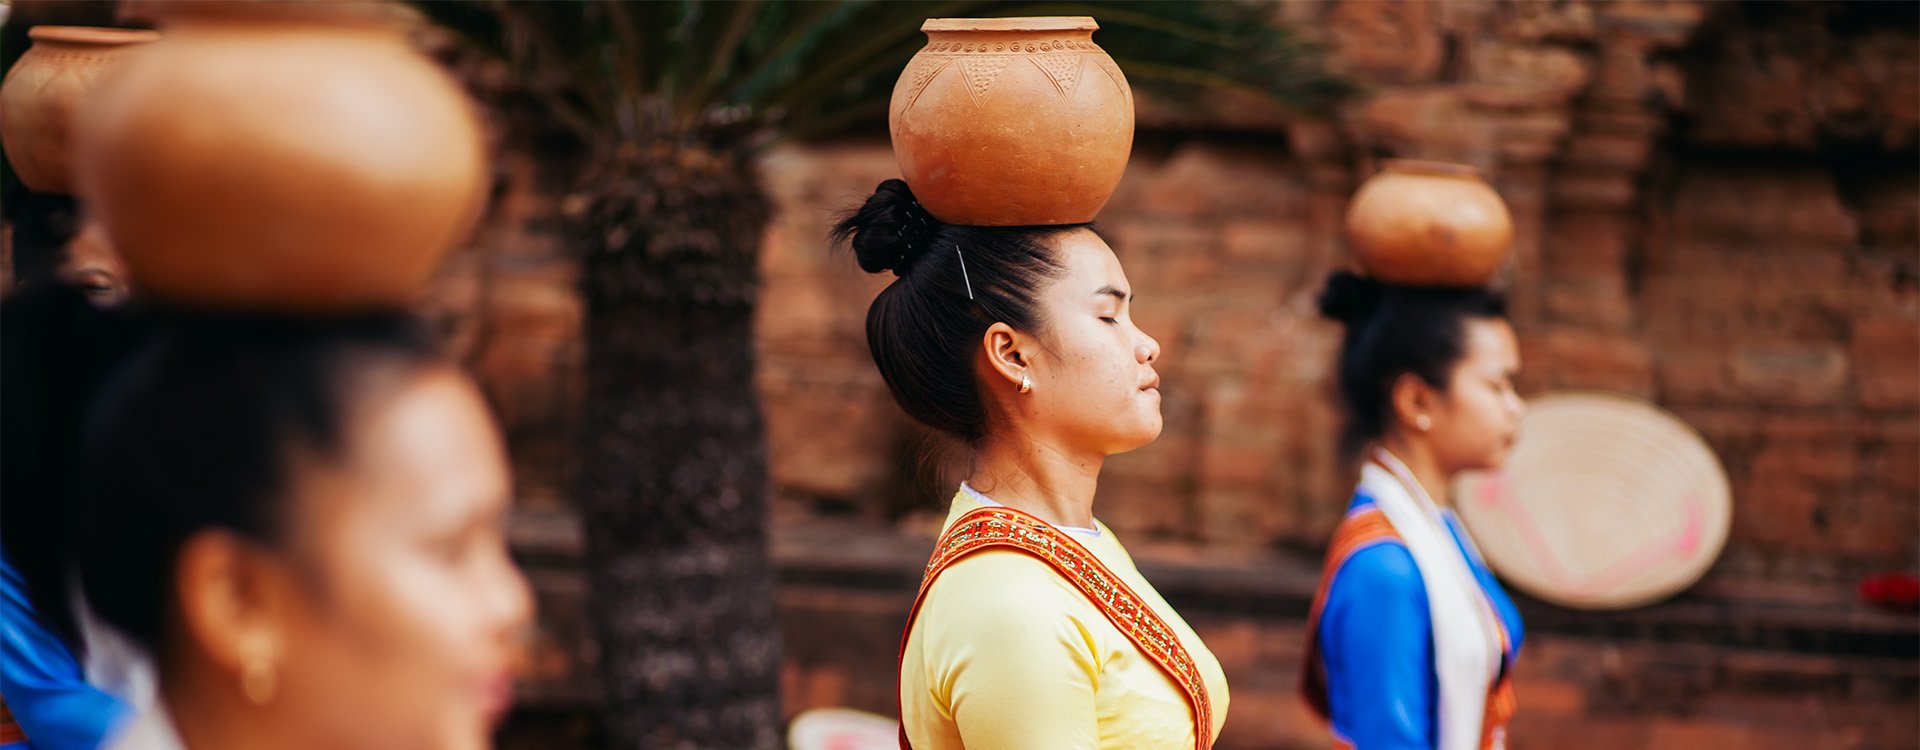 Nha Trang, VIETNAM women dance Traditional with clay pots on lunar new year in pagoda Po Nagar.